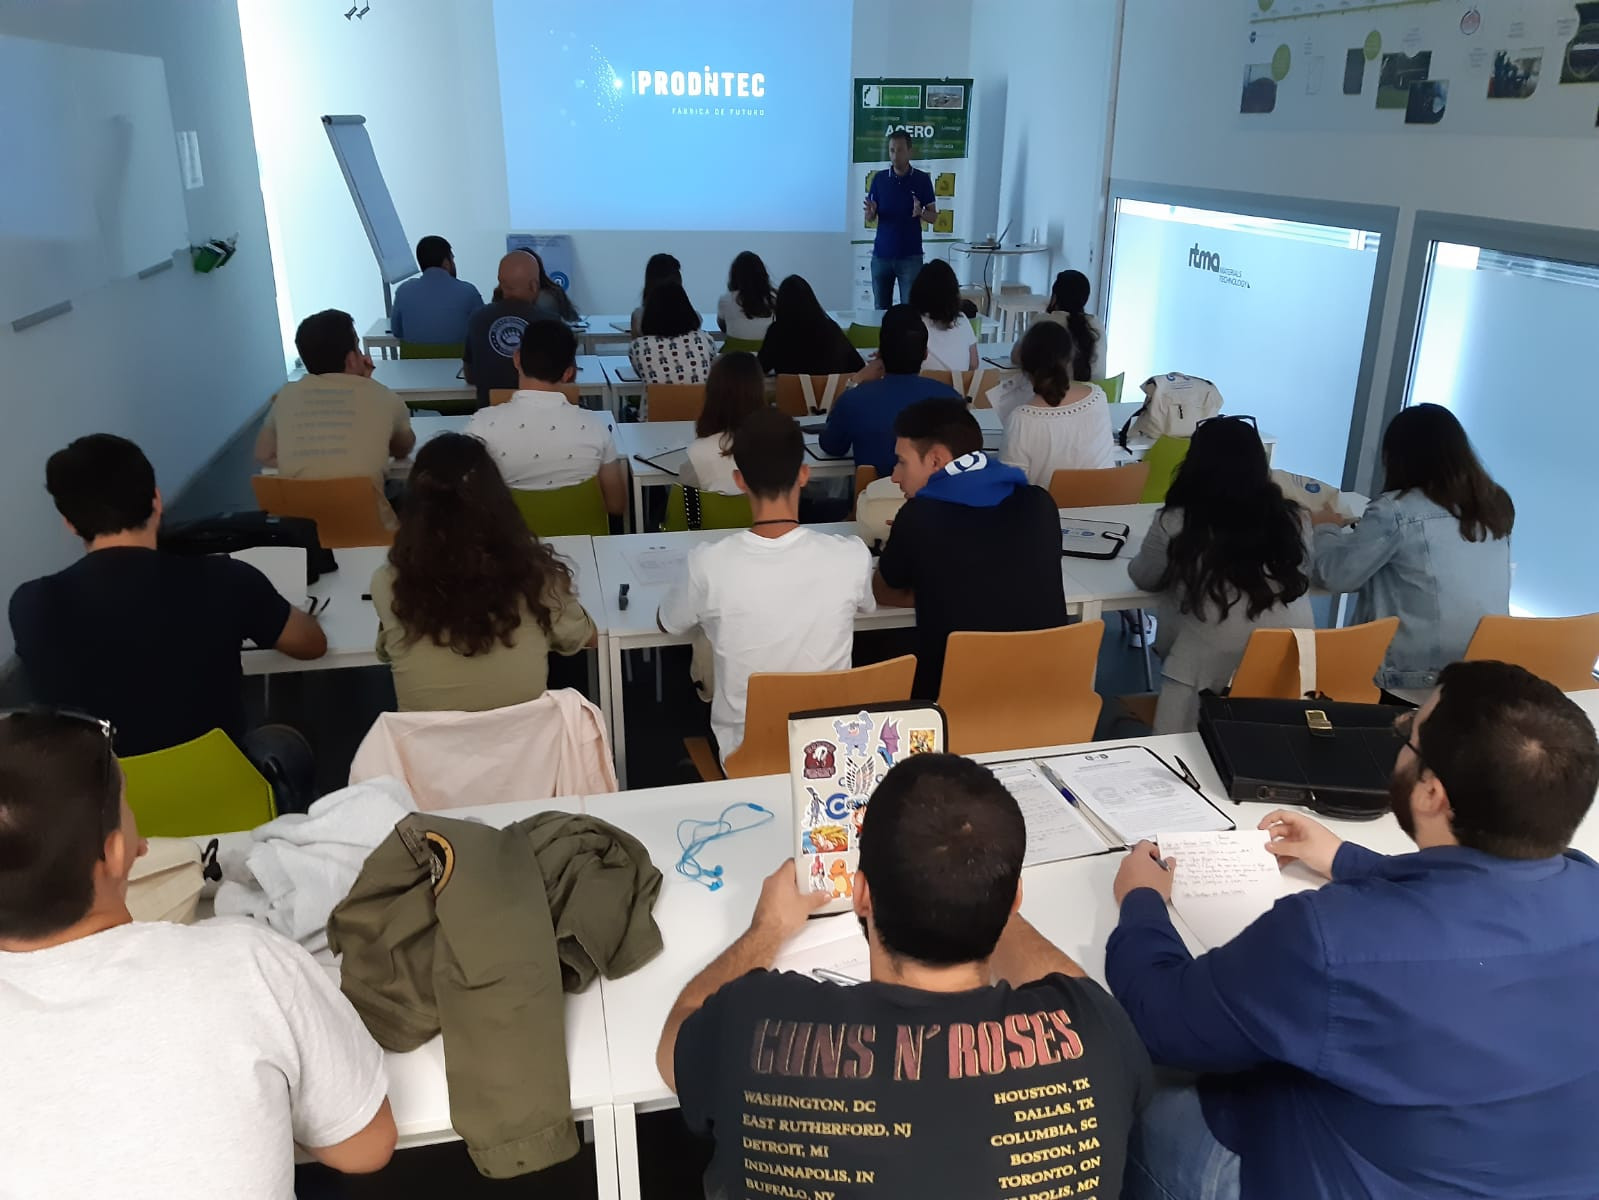 Asturias joven emprenda Centro Tecnológico Acero